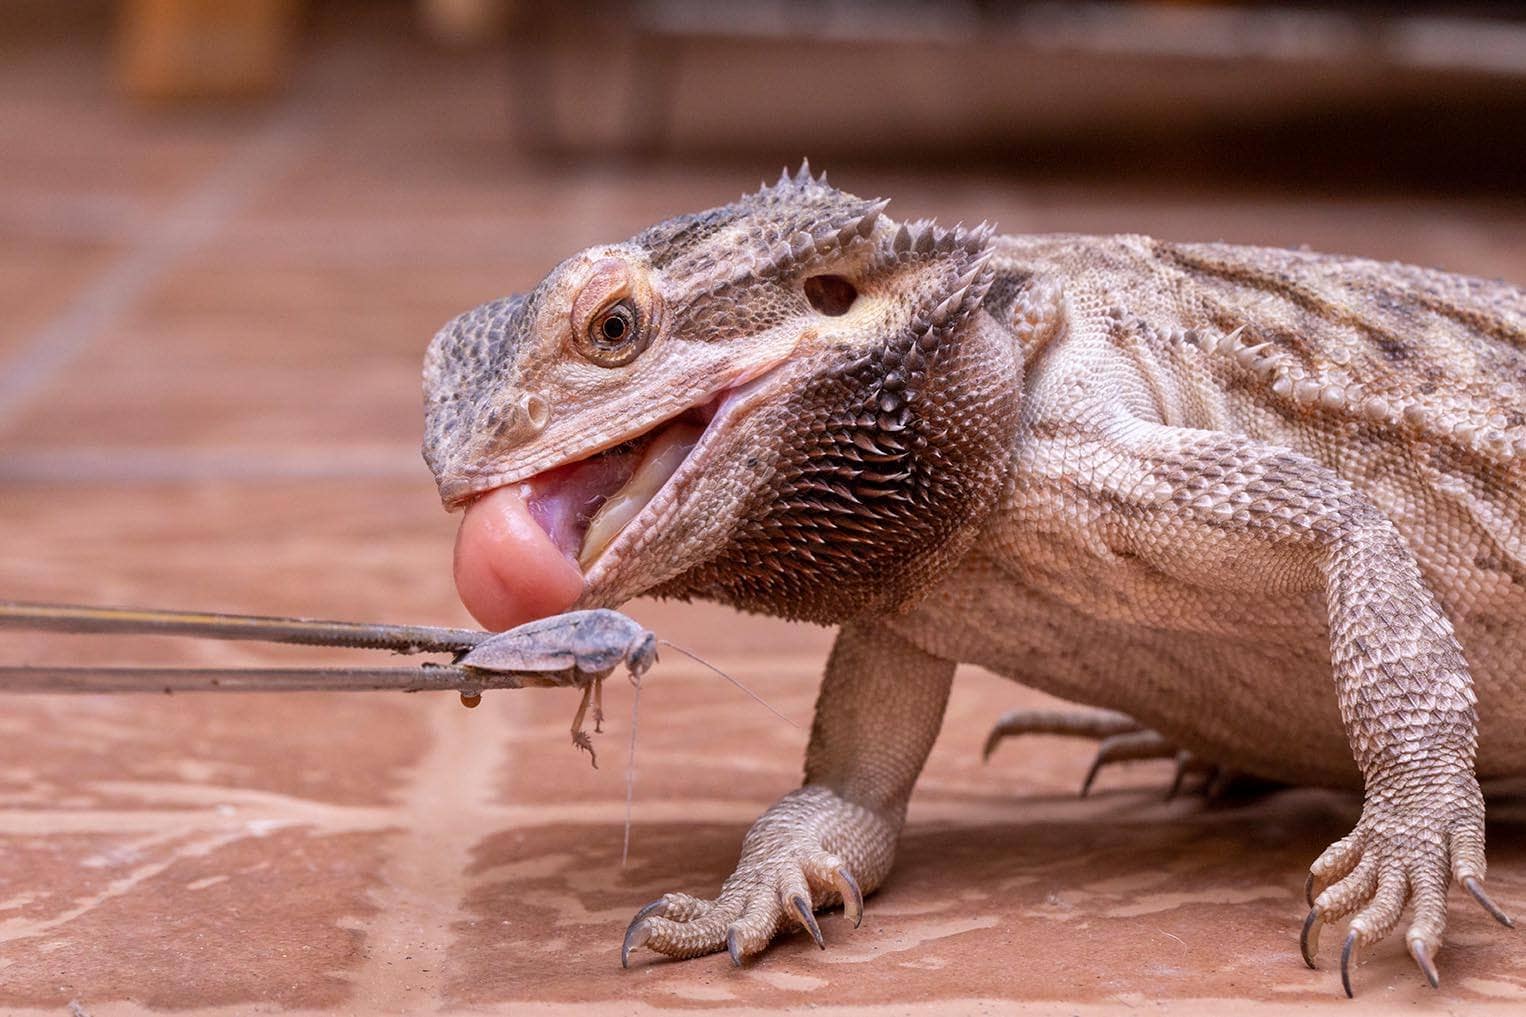 feeding cricket to a bearded dragon Murilo Mazzo Shutterstock